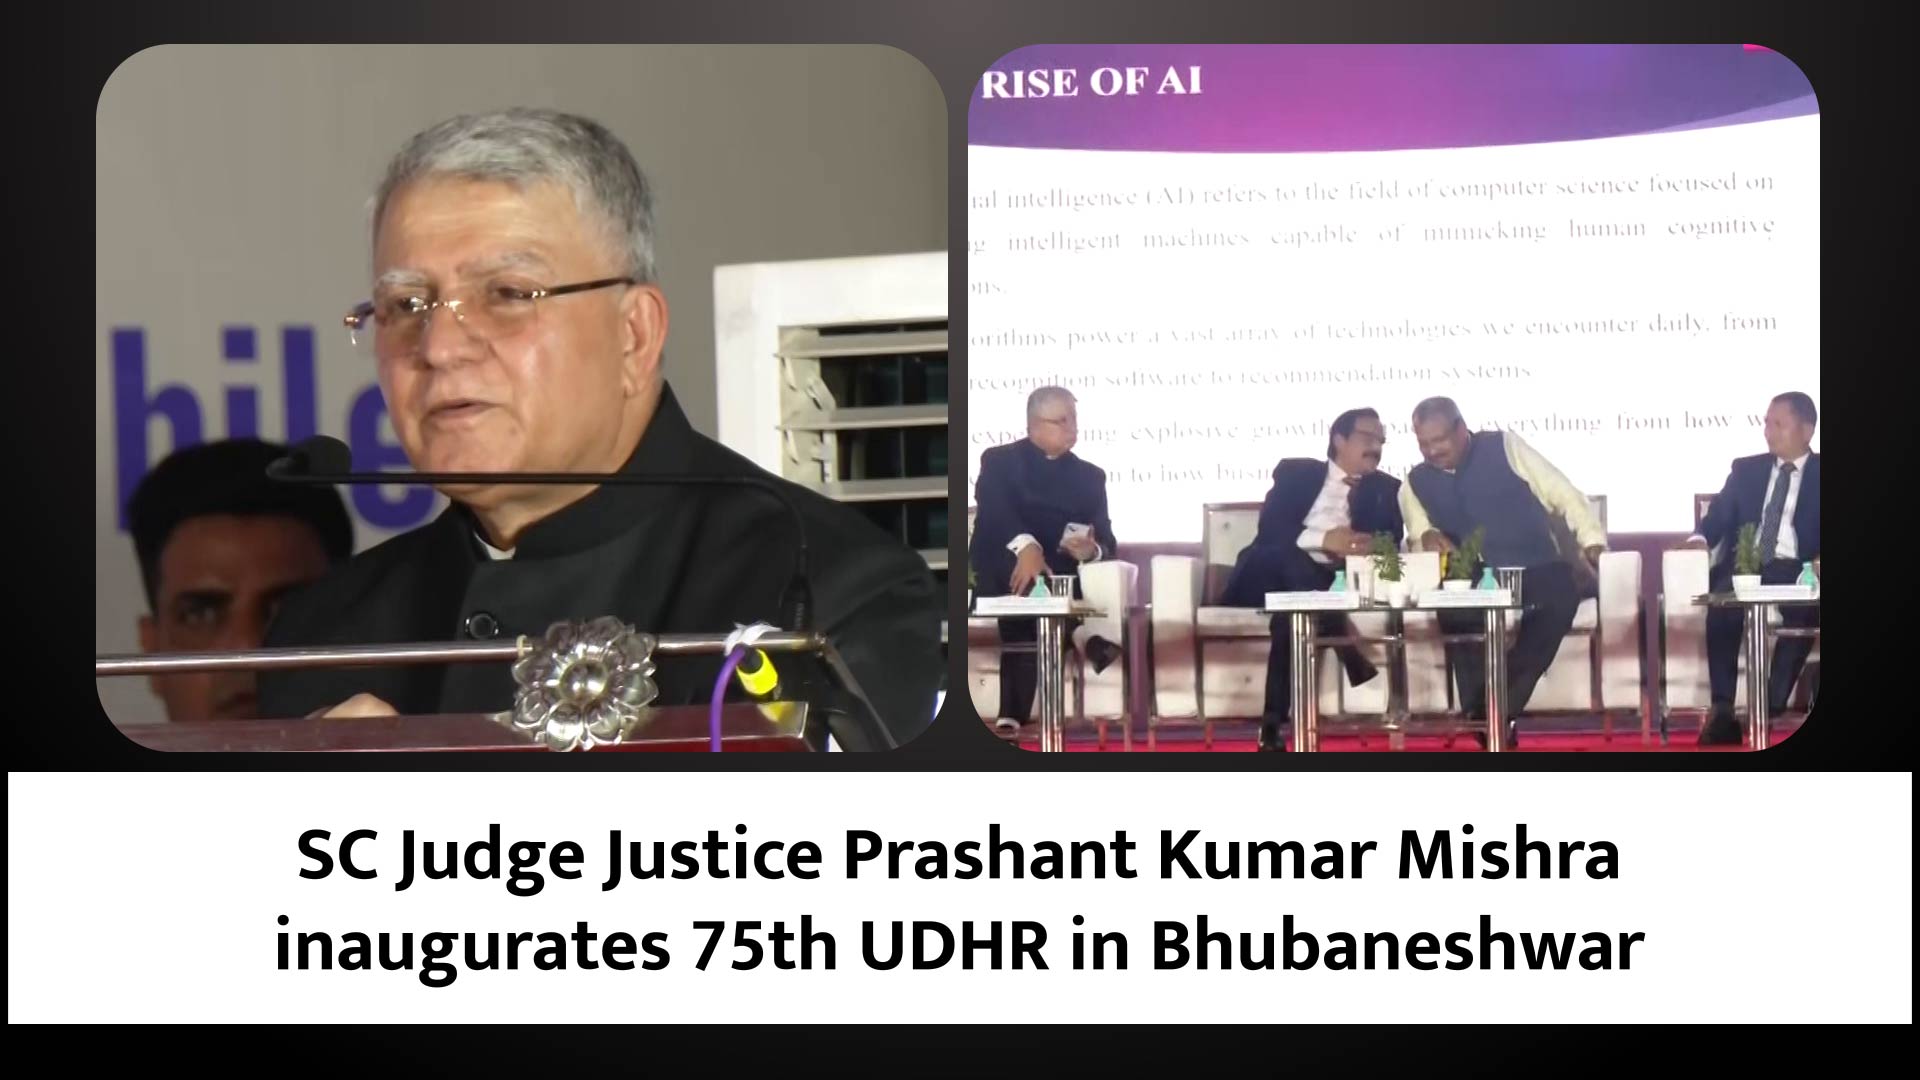 Supreme Court Judge Justice Prashant Kumar Mishra inaugurates 75th UDHR in Bhubaneshwar